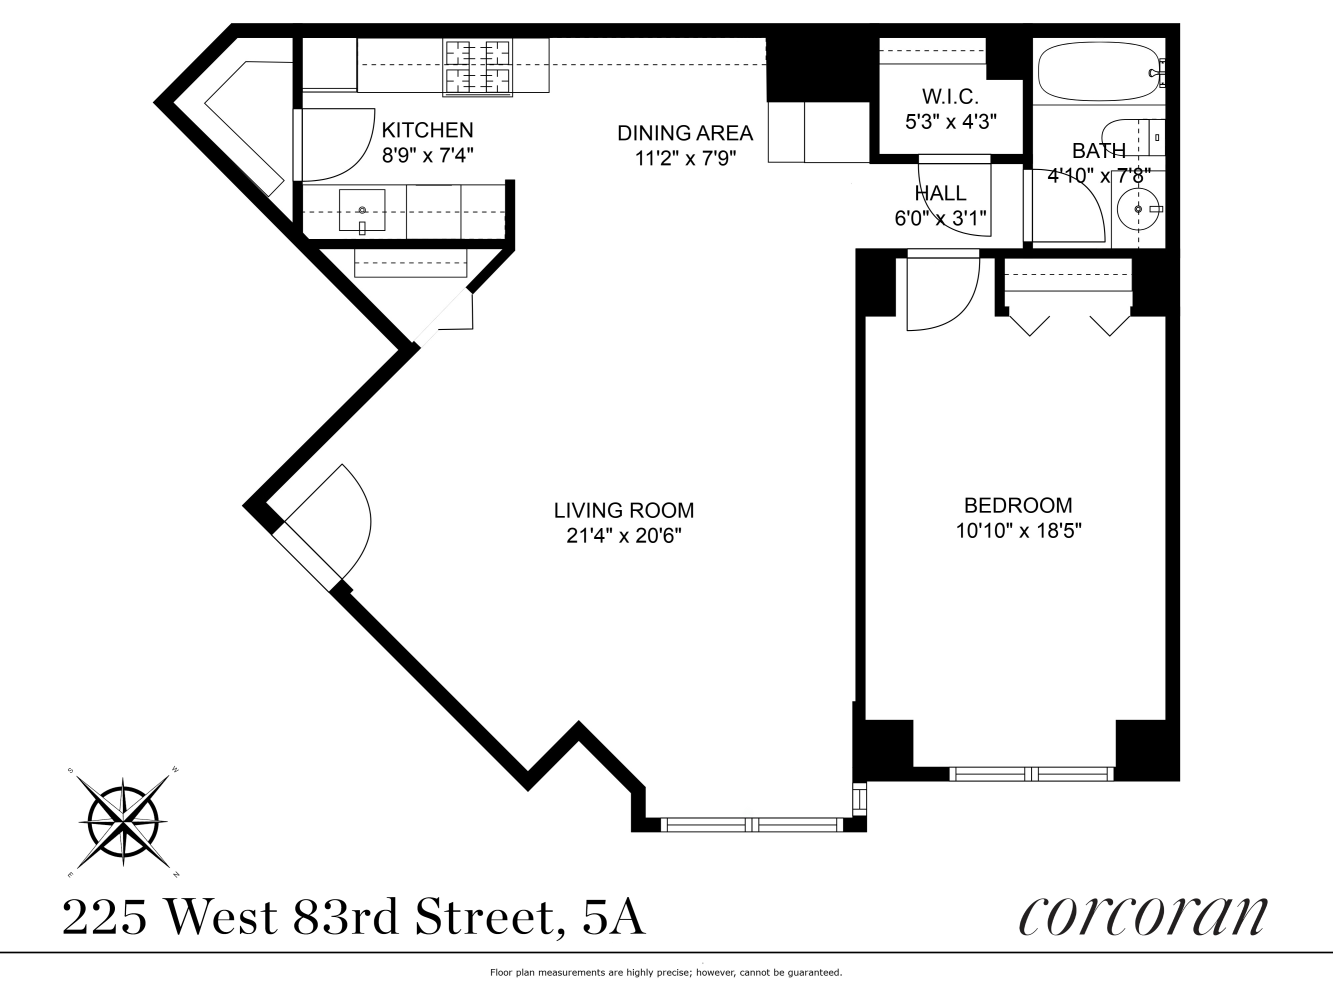 Floorplan for 225 West 83rd Street, 5A